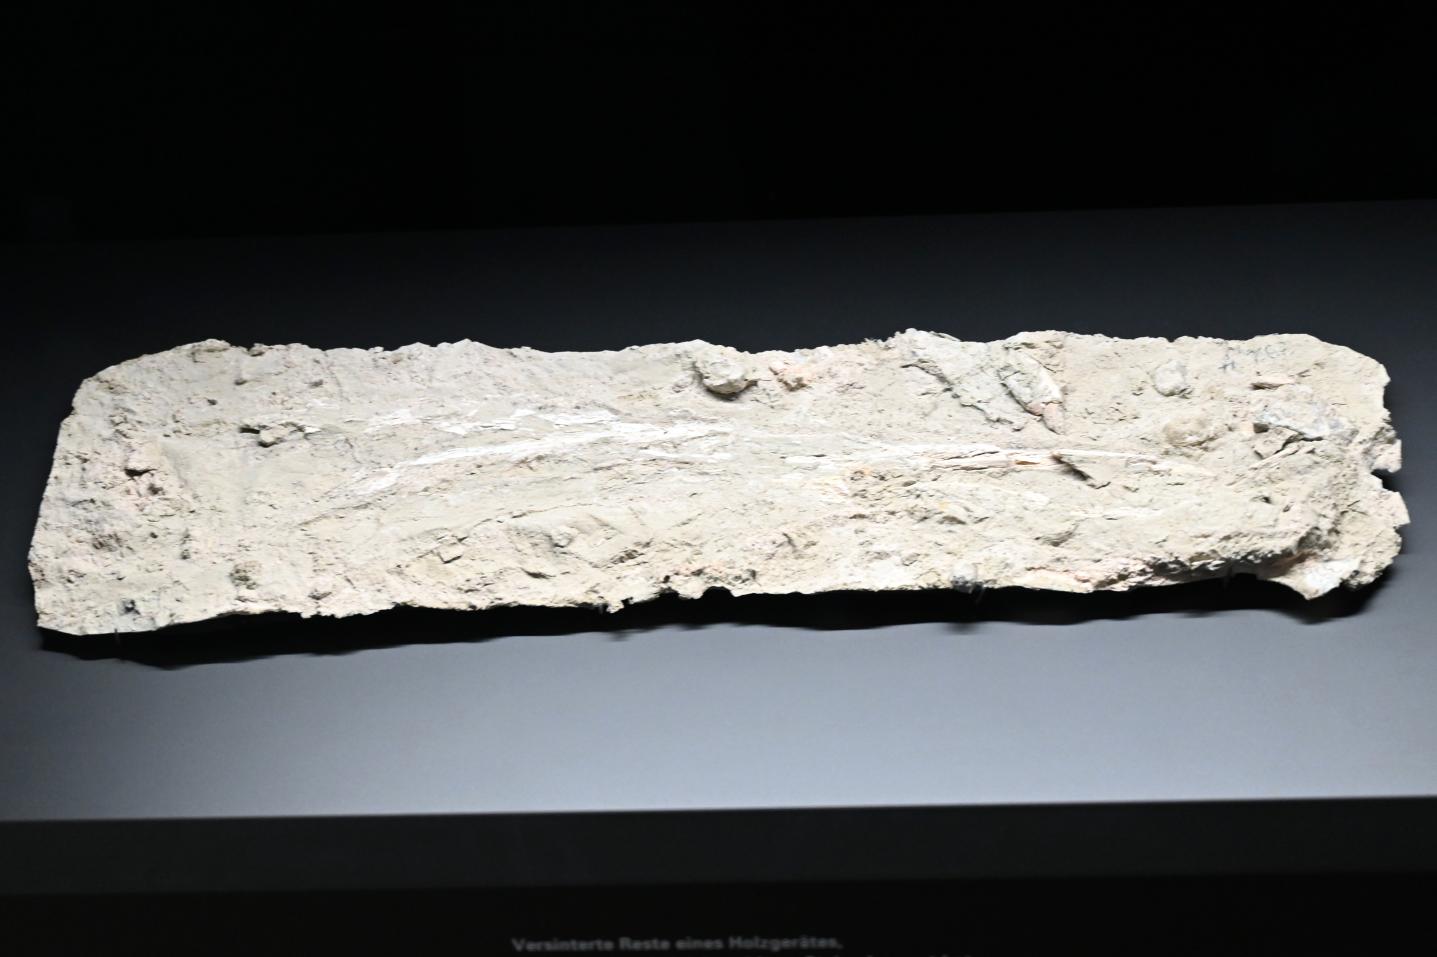 Versinterte Reste eines Holzgerätes, Reinsdorf-Warmzeit, 370000 v. Chr., 370000 v. Chr.